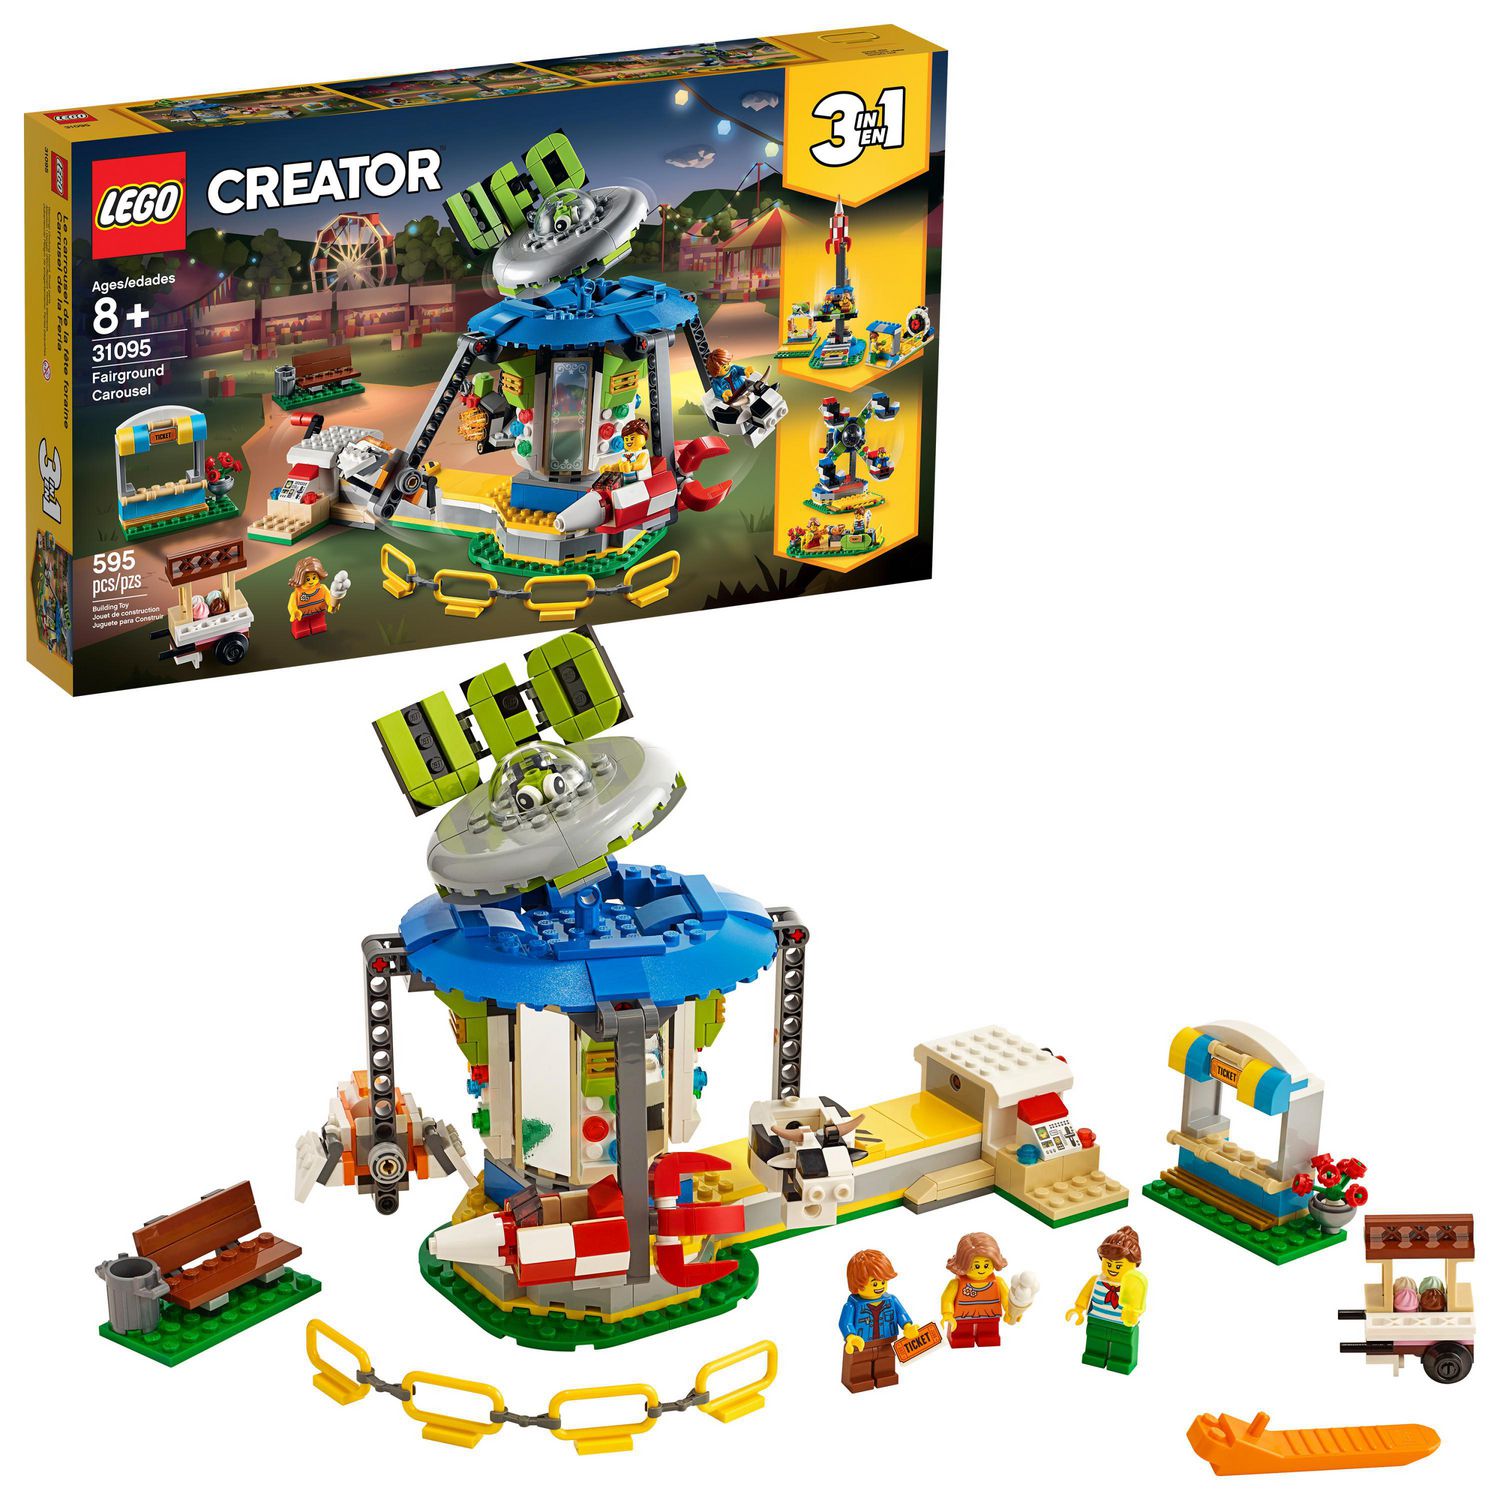 LEGO Creator 3in1 Fairground Carousel 31095 Toy Building Kit (595 Piece